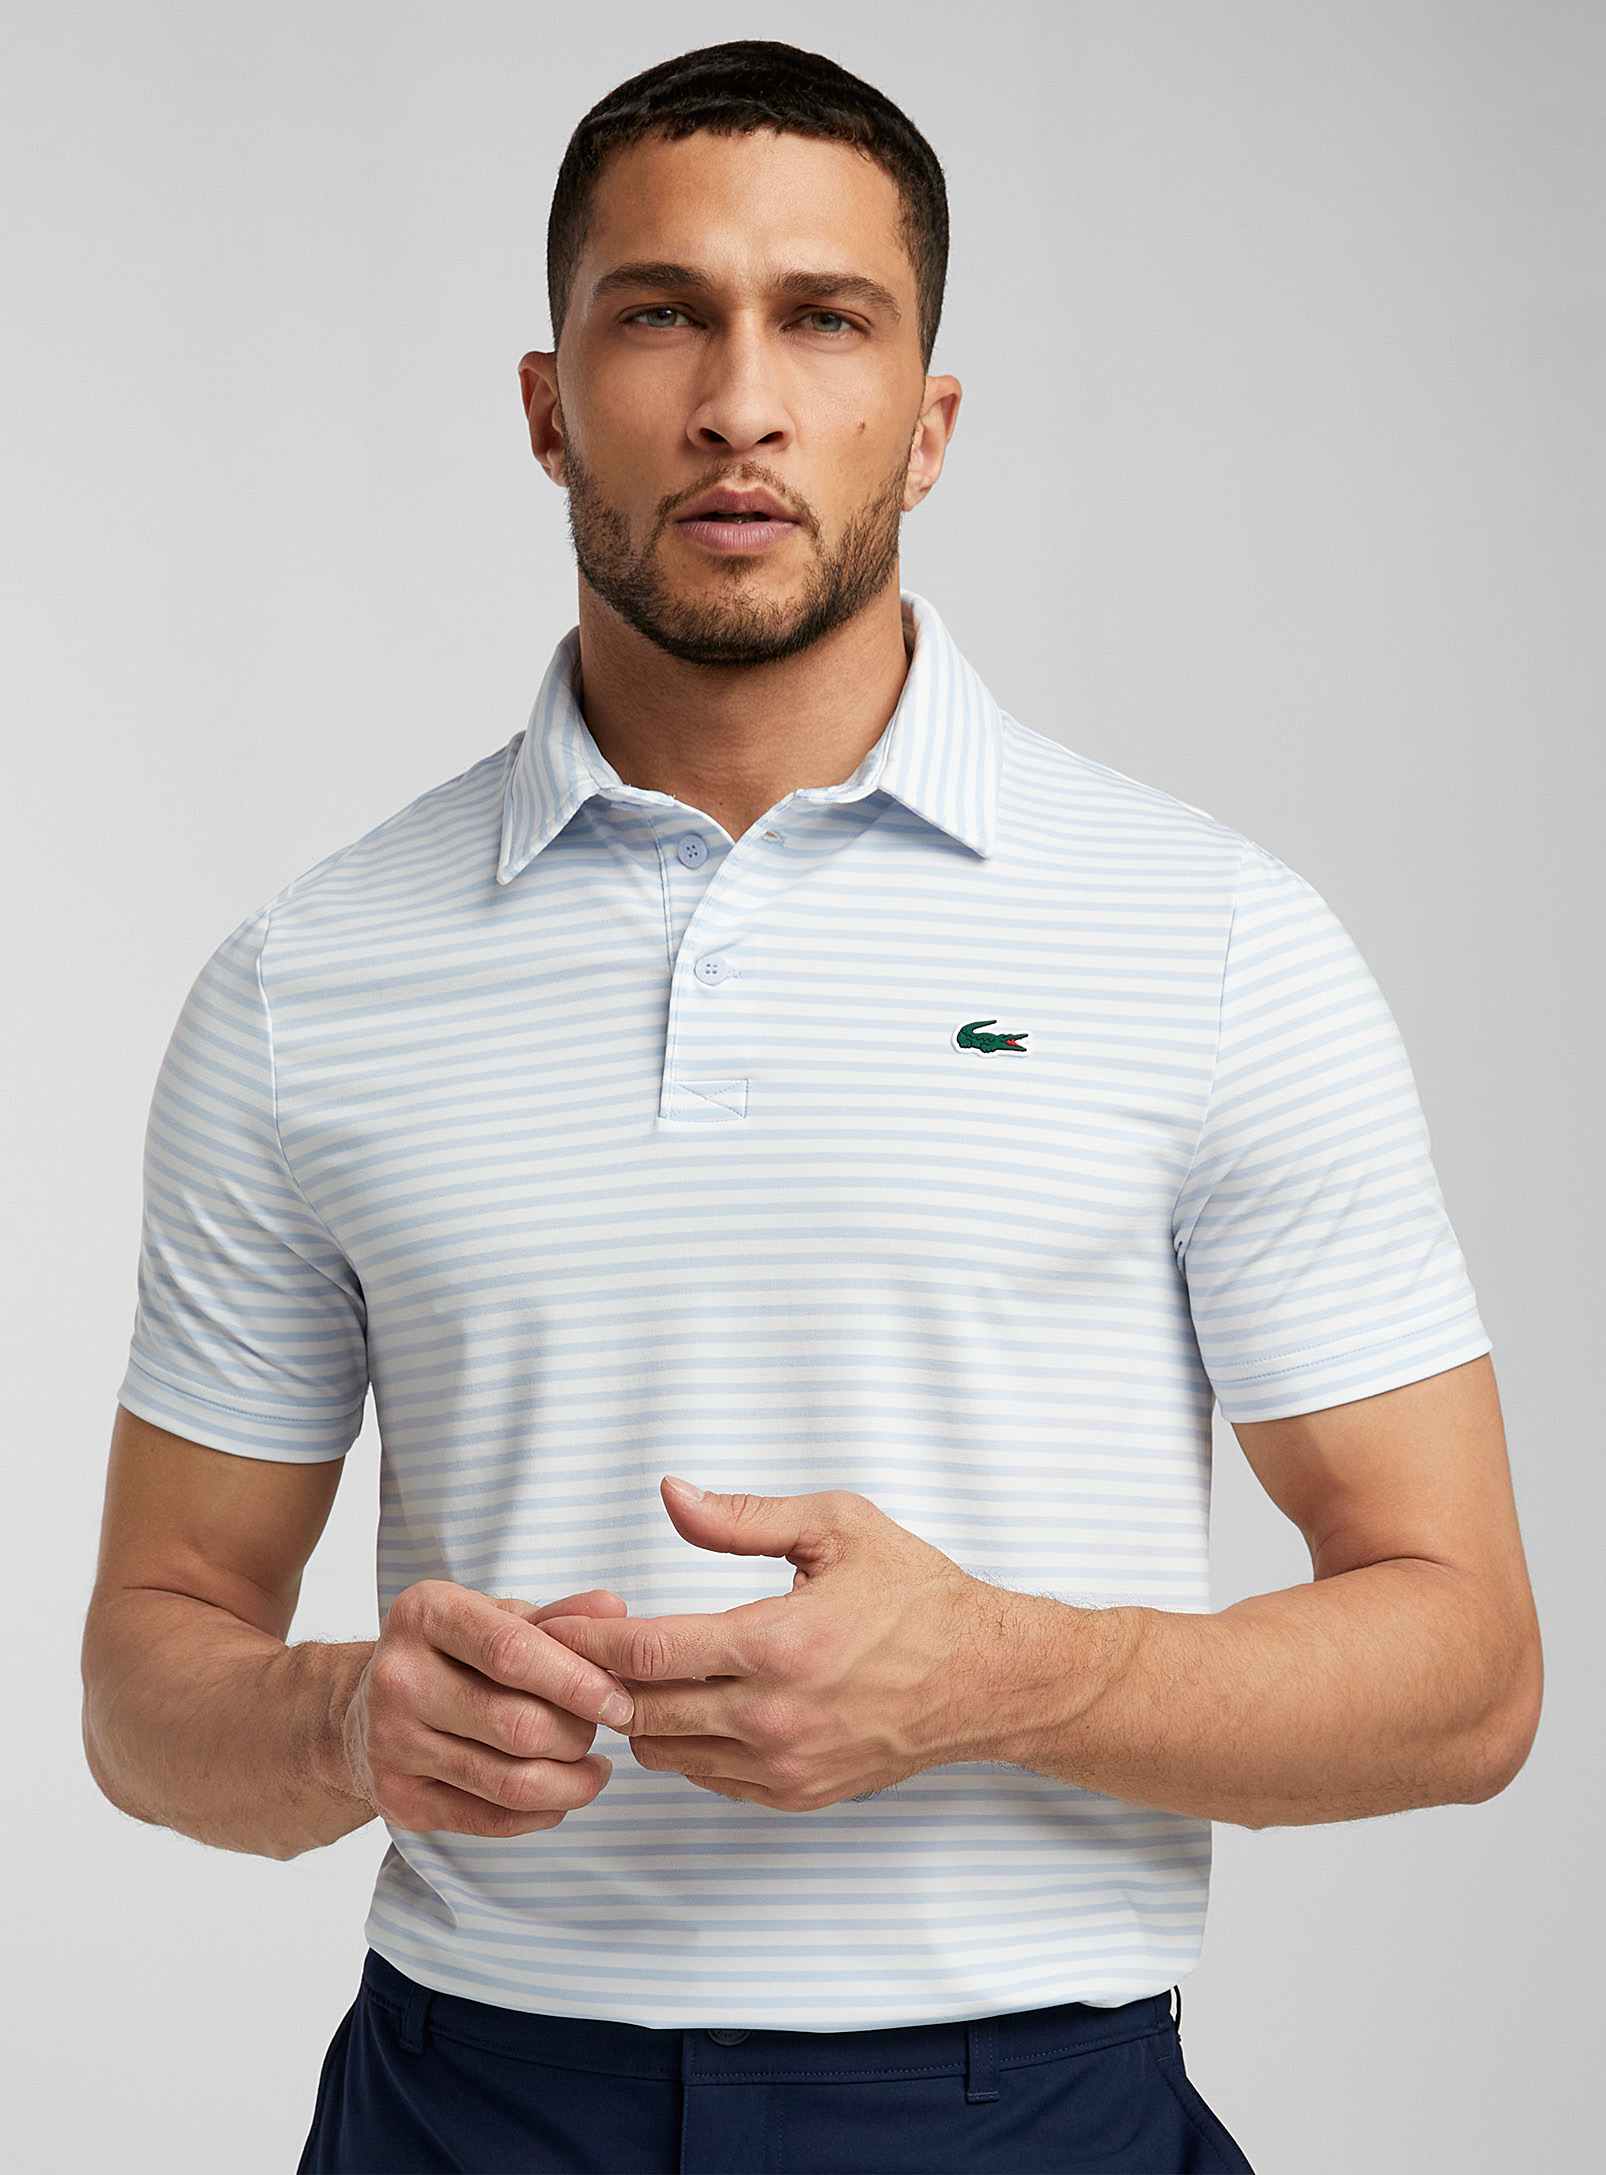 Lacoste - Men's Ultra-soft light-stripe Polo Shirt